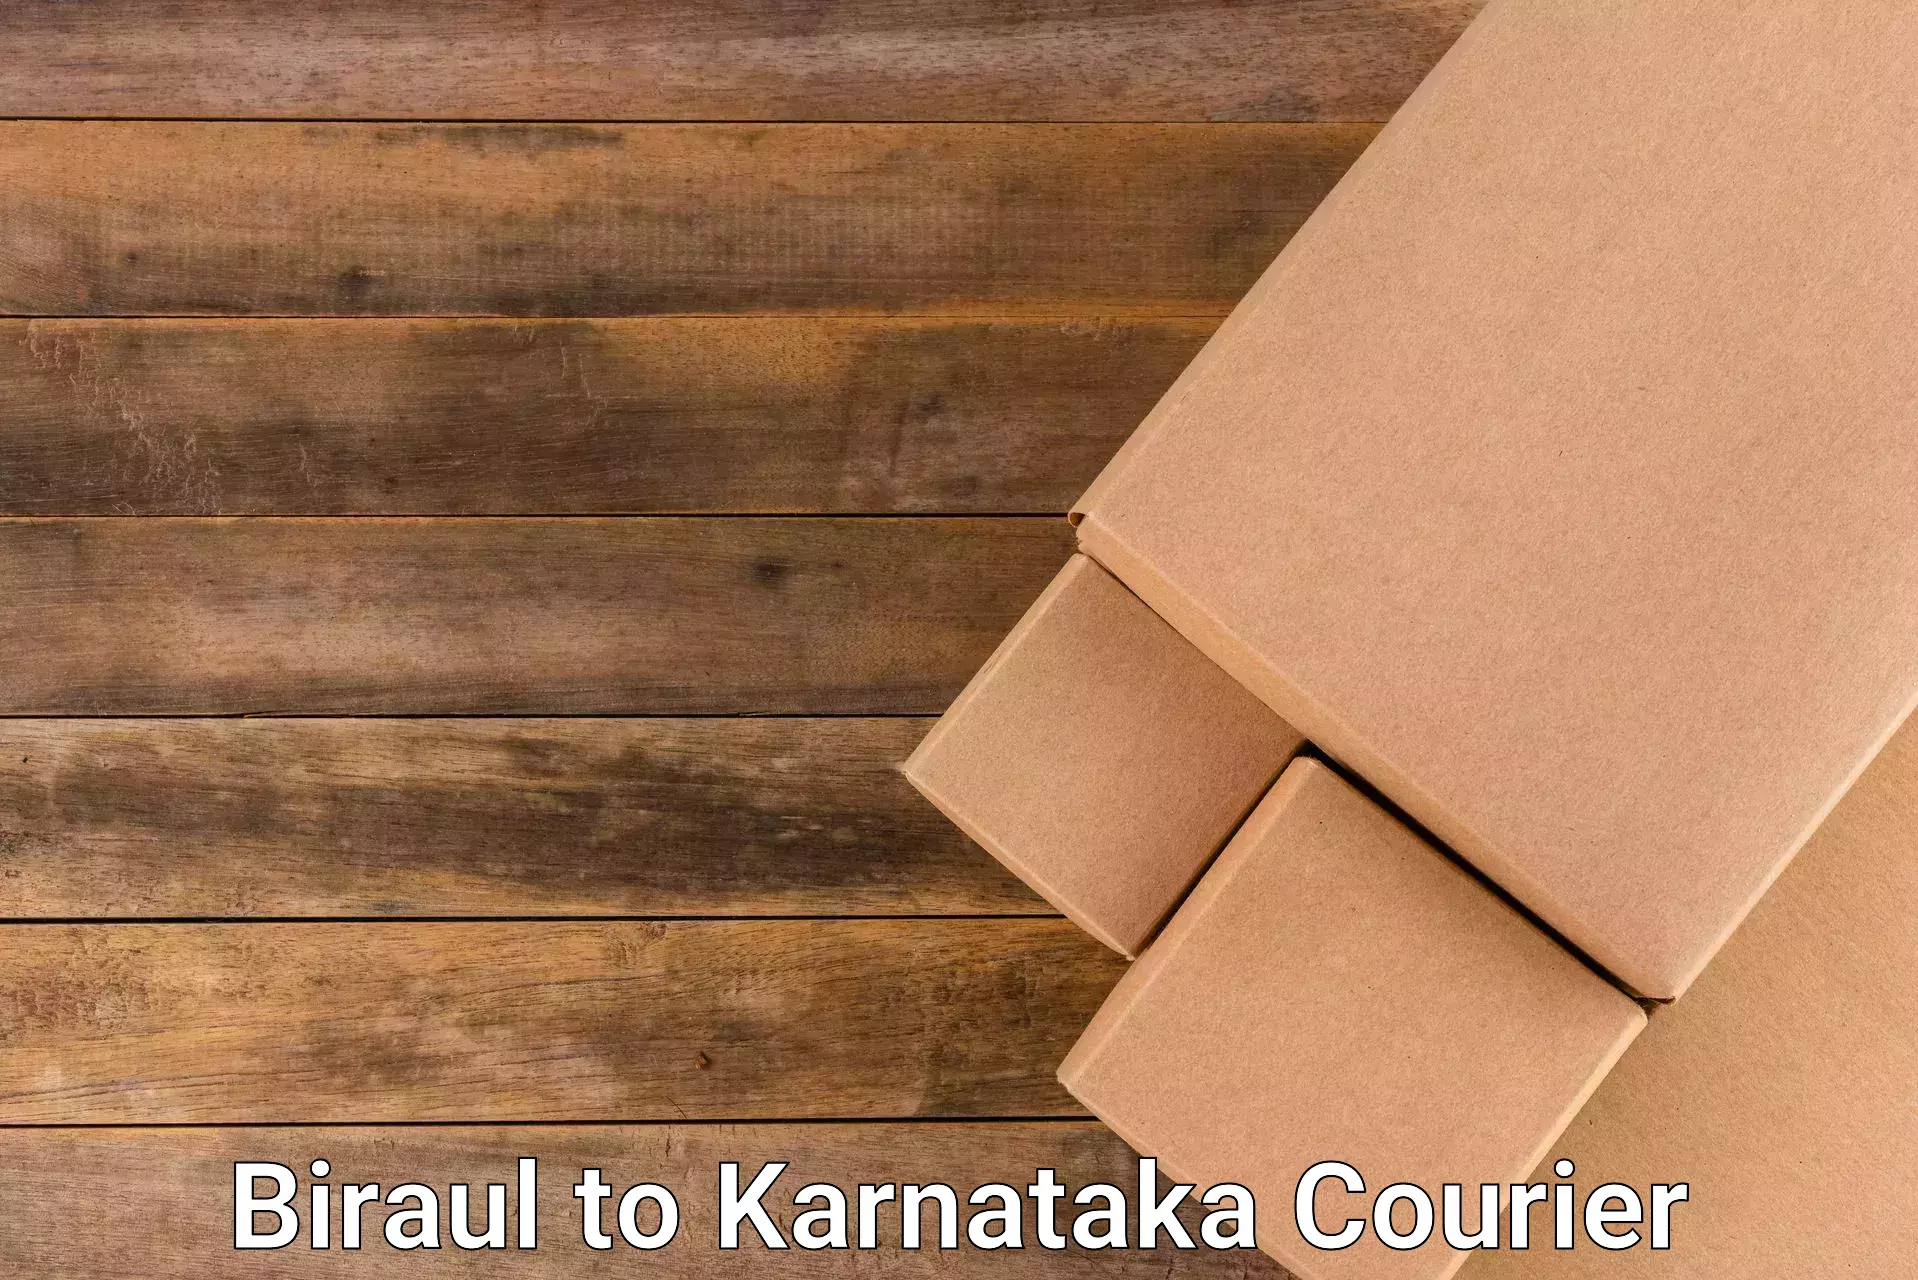 Tech-enabled shipping Biraul to Karnataka